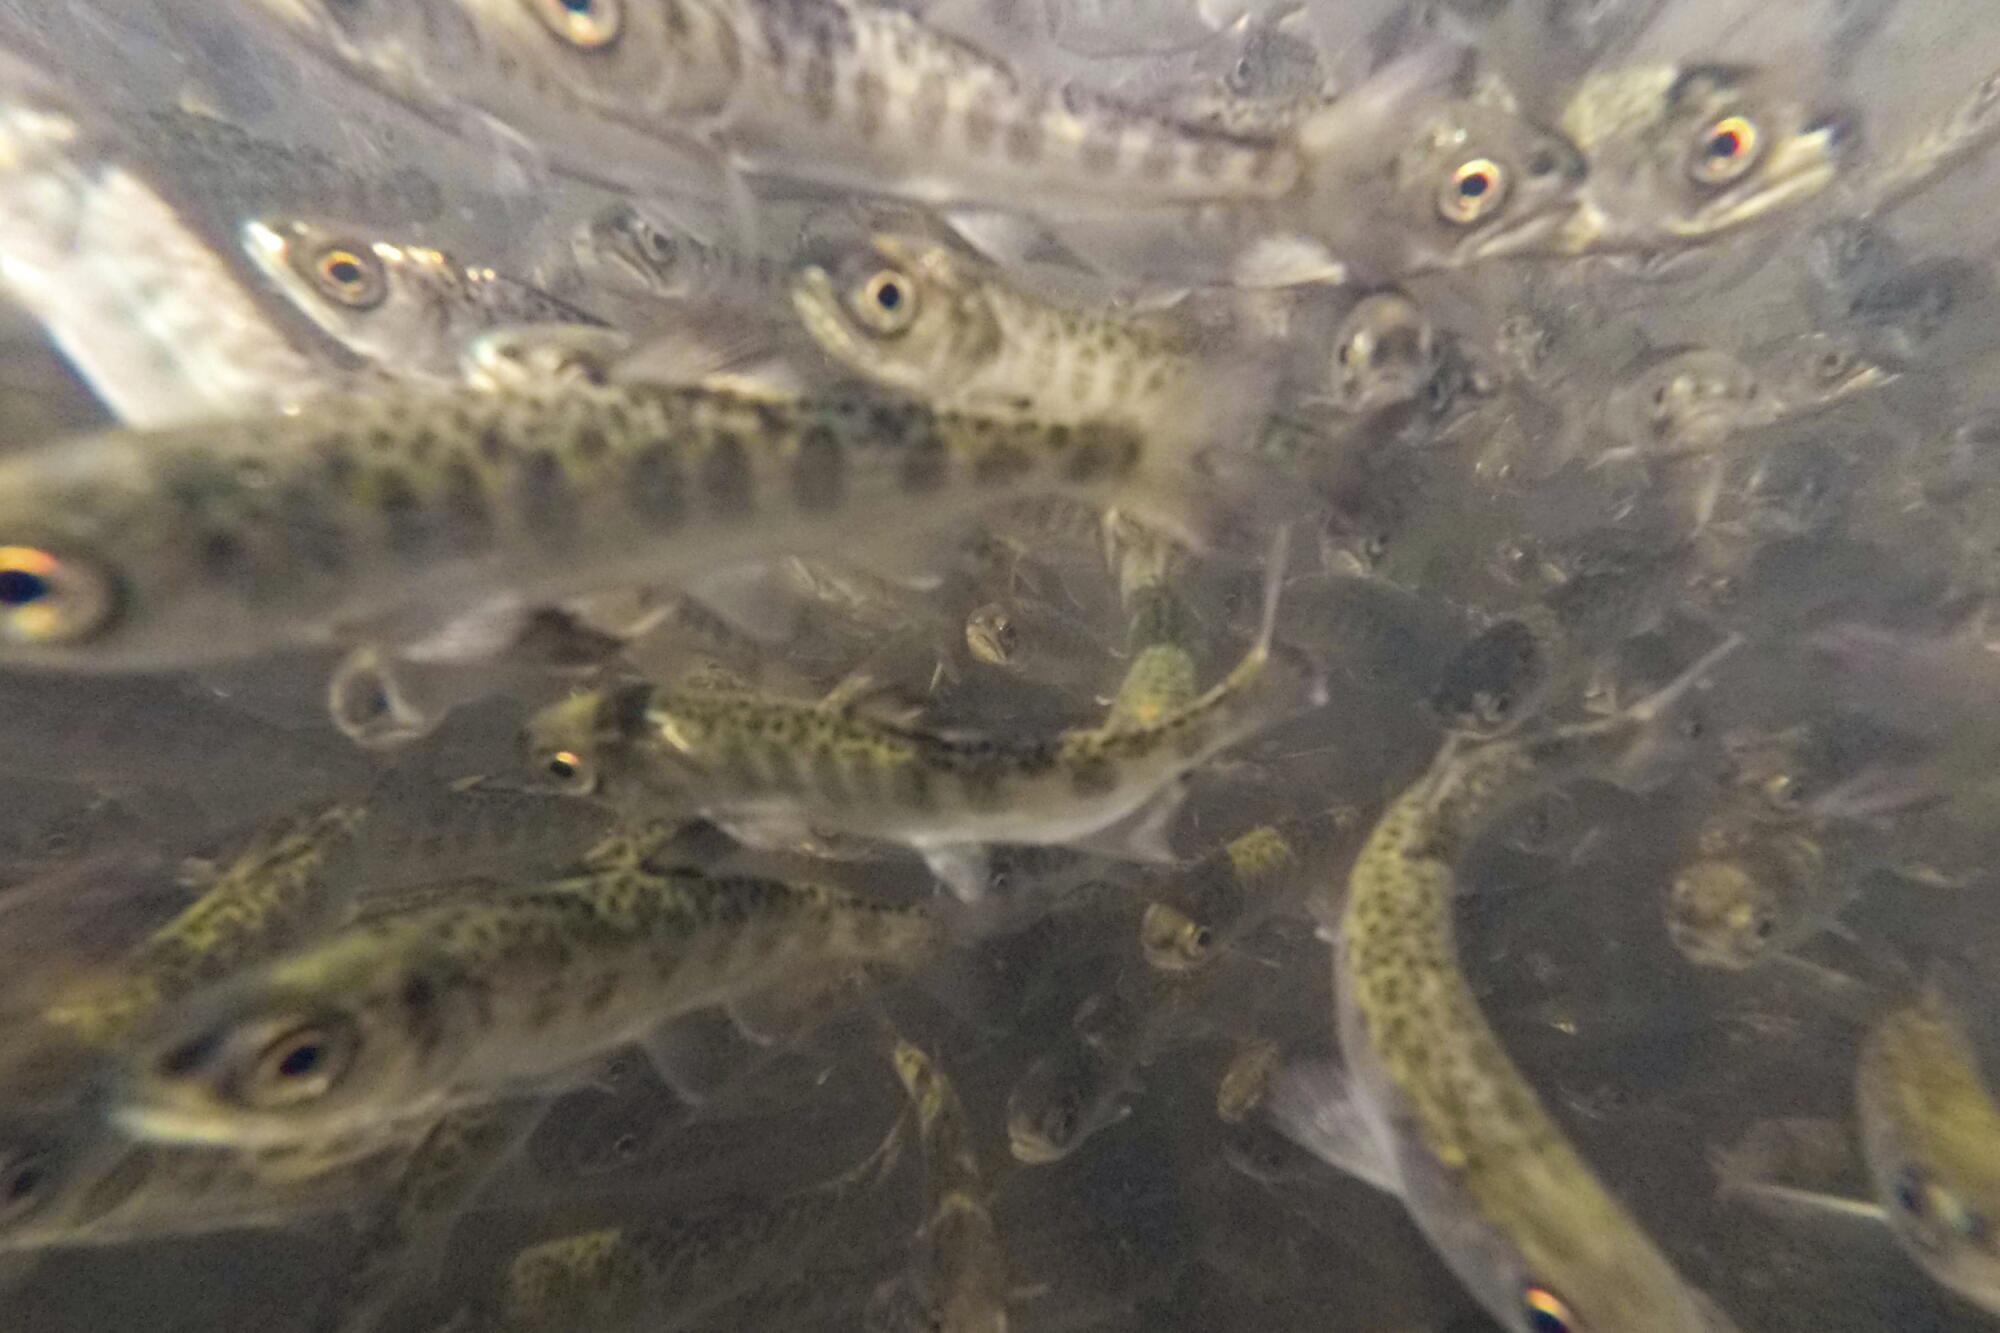 Juvenile Chinook salmon swim in a tank at a fish hatchery